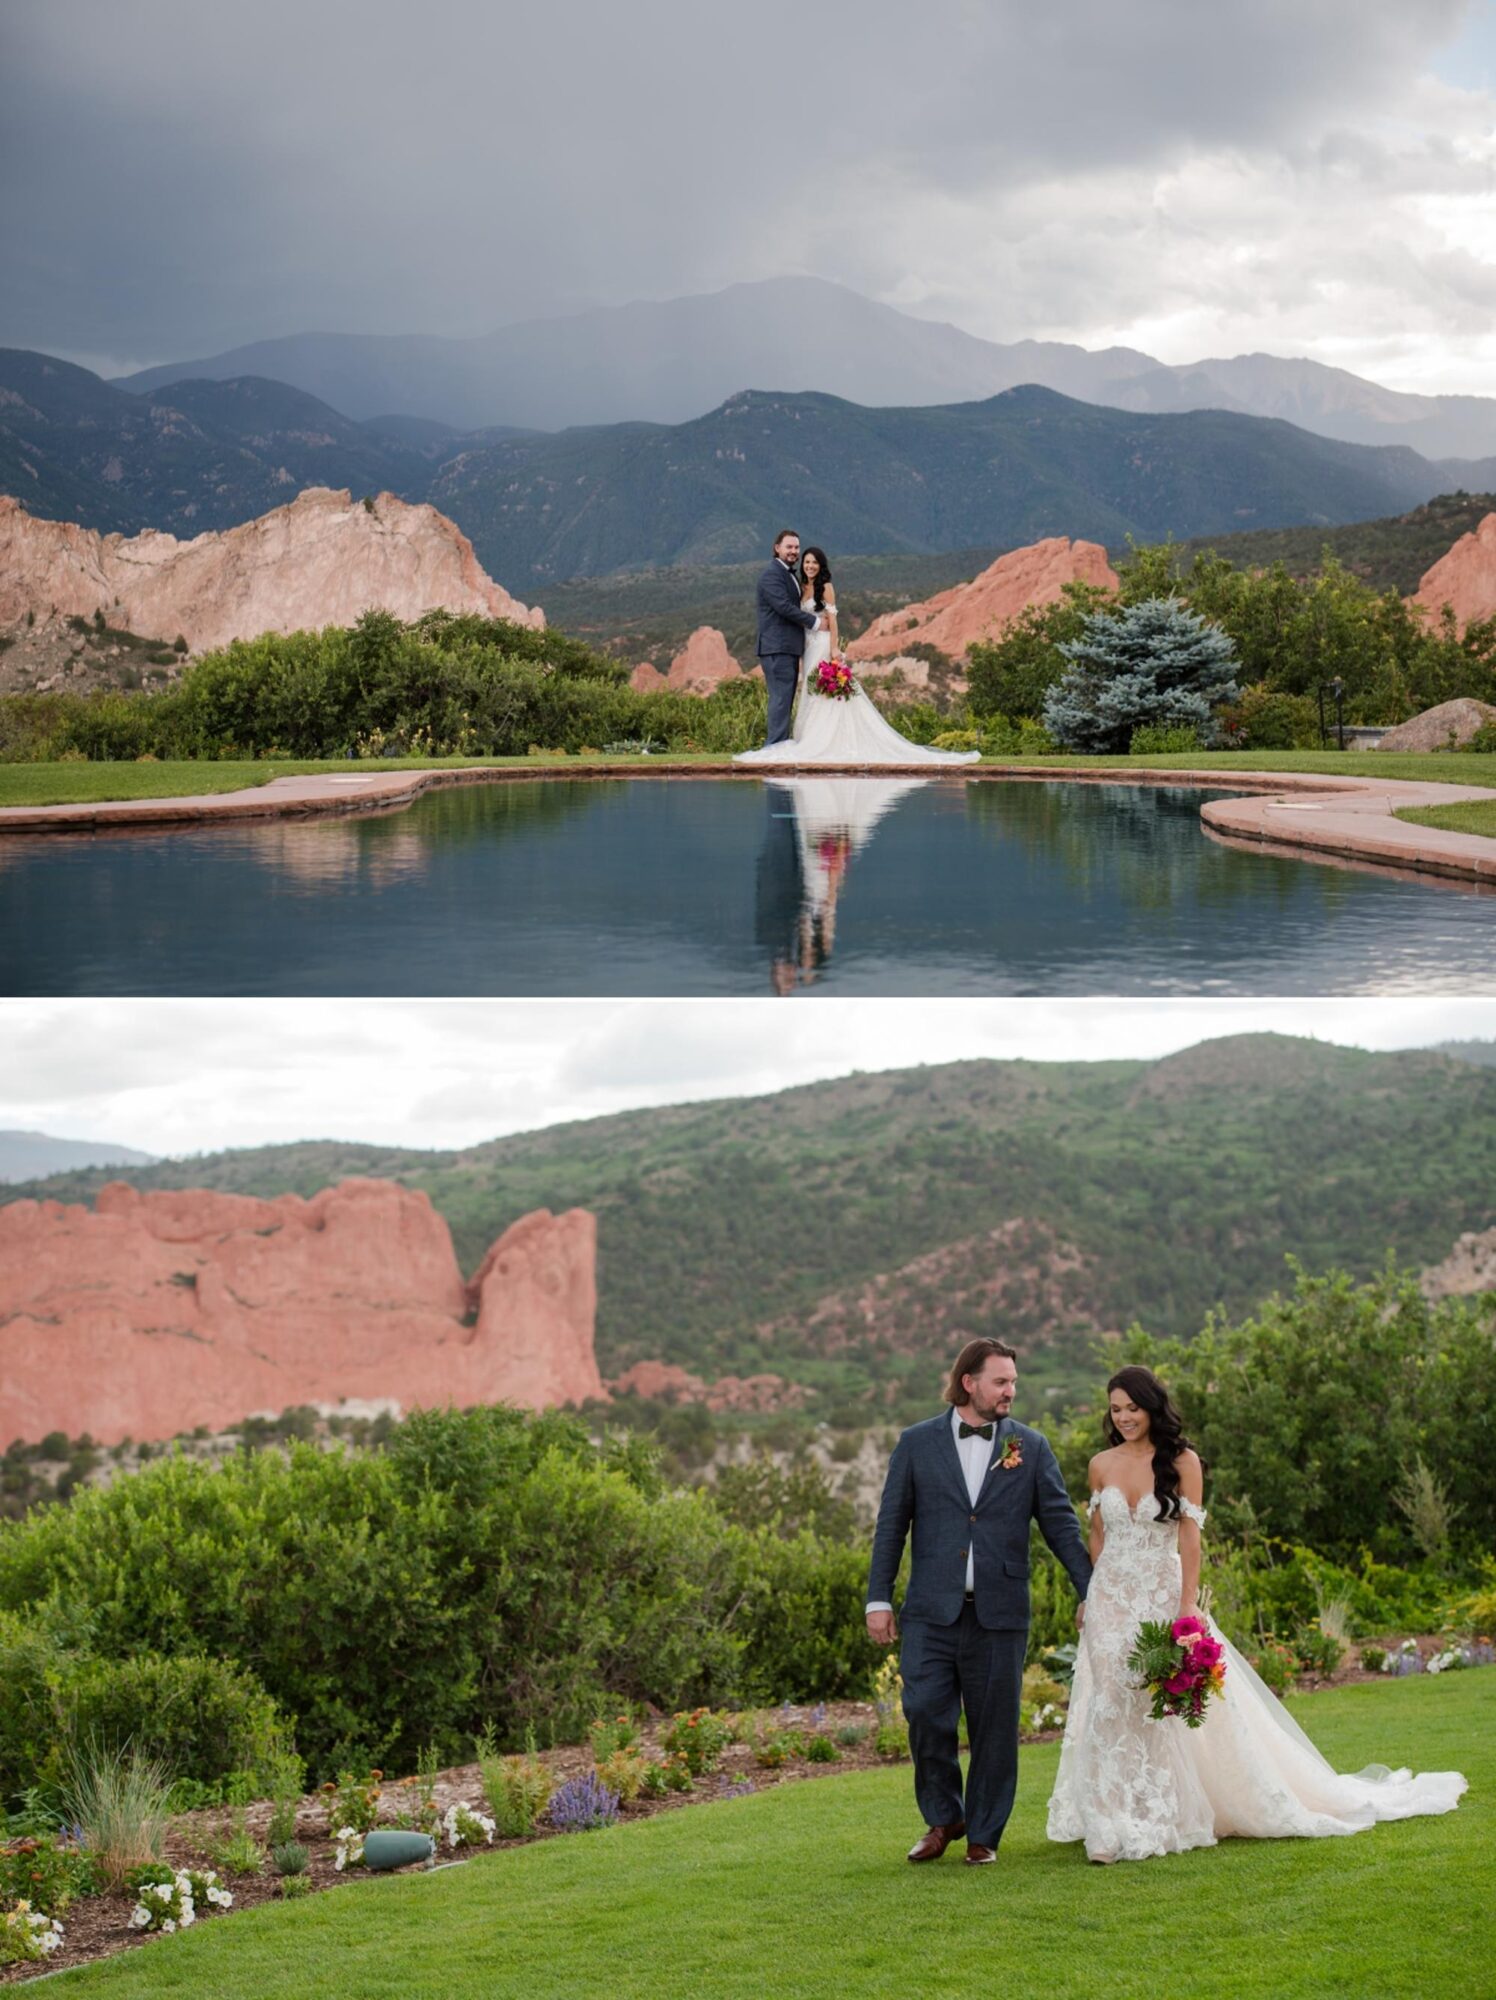 Colorado Springs picturesque wedding